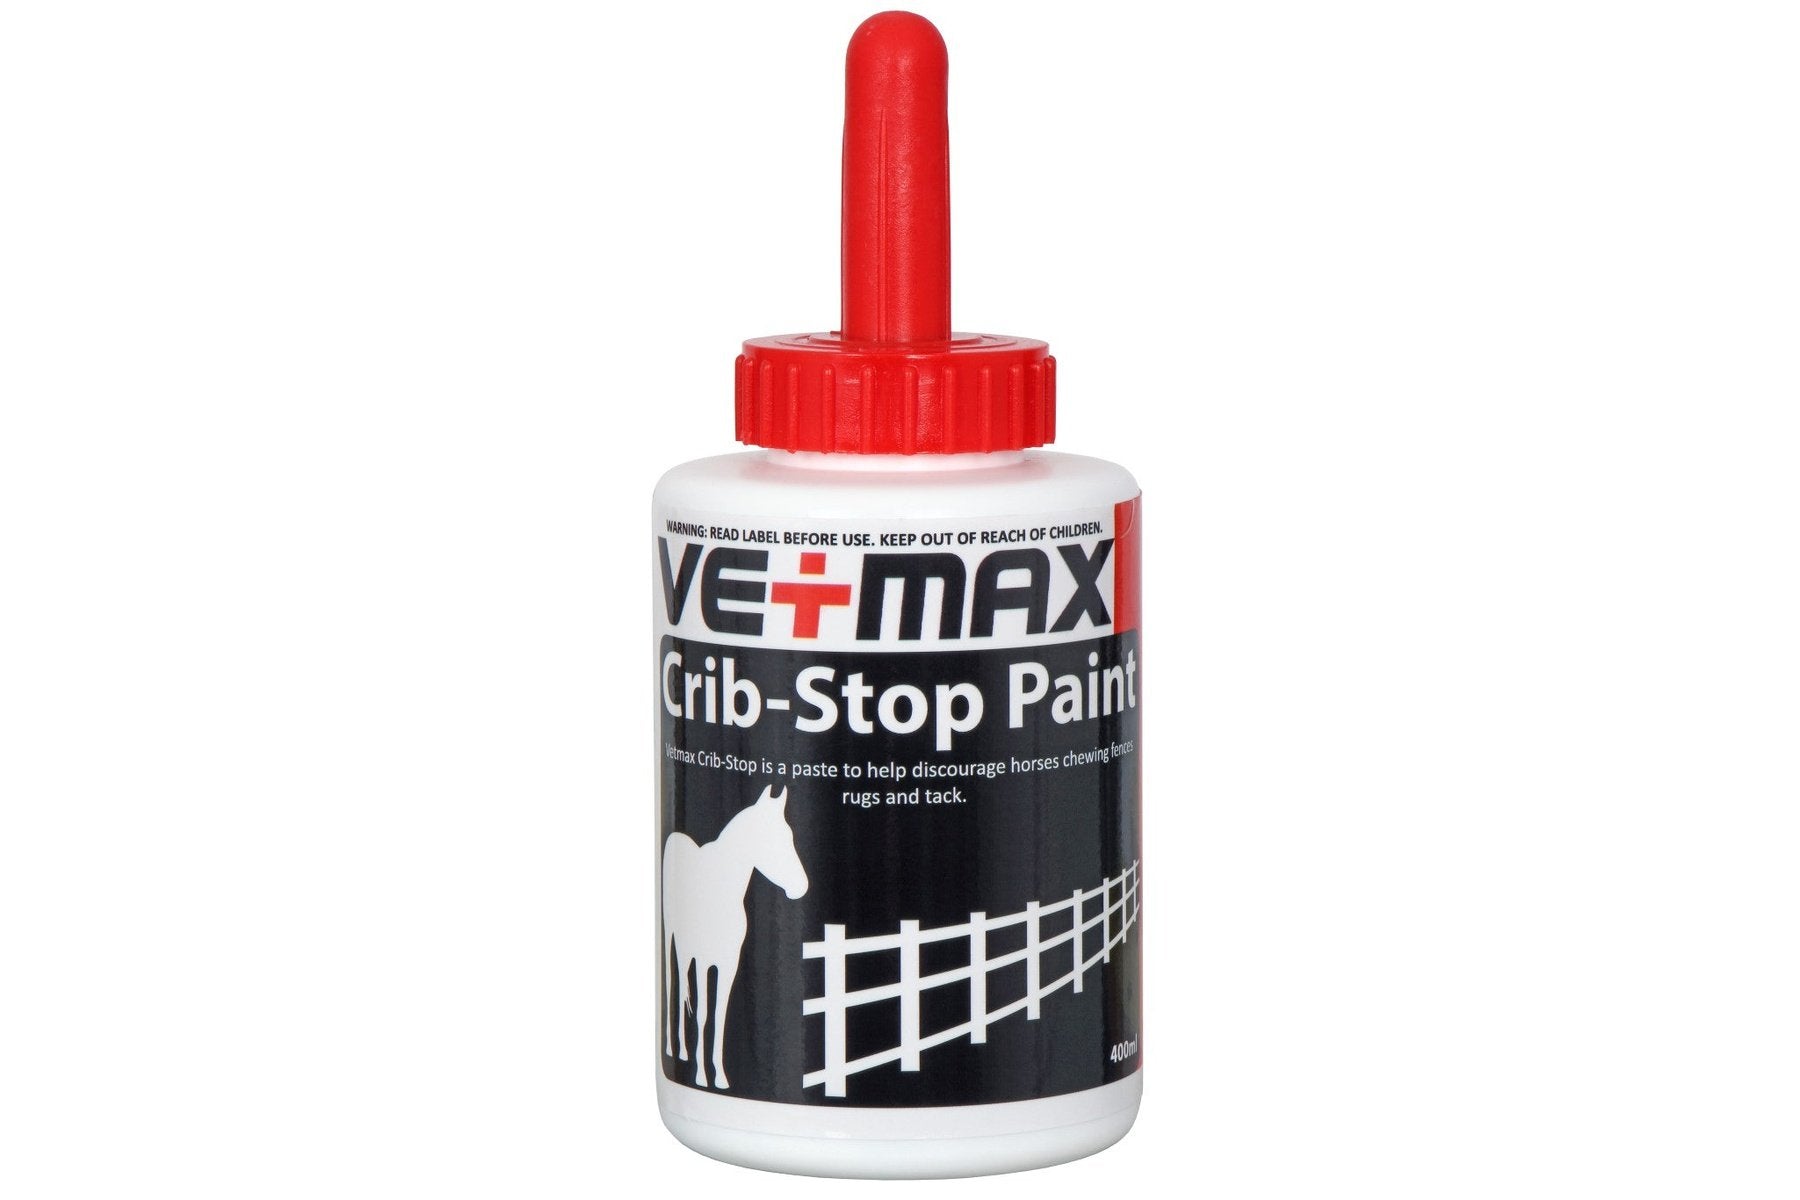 Vetmax Crib Stop Paint